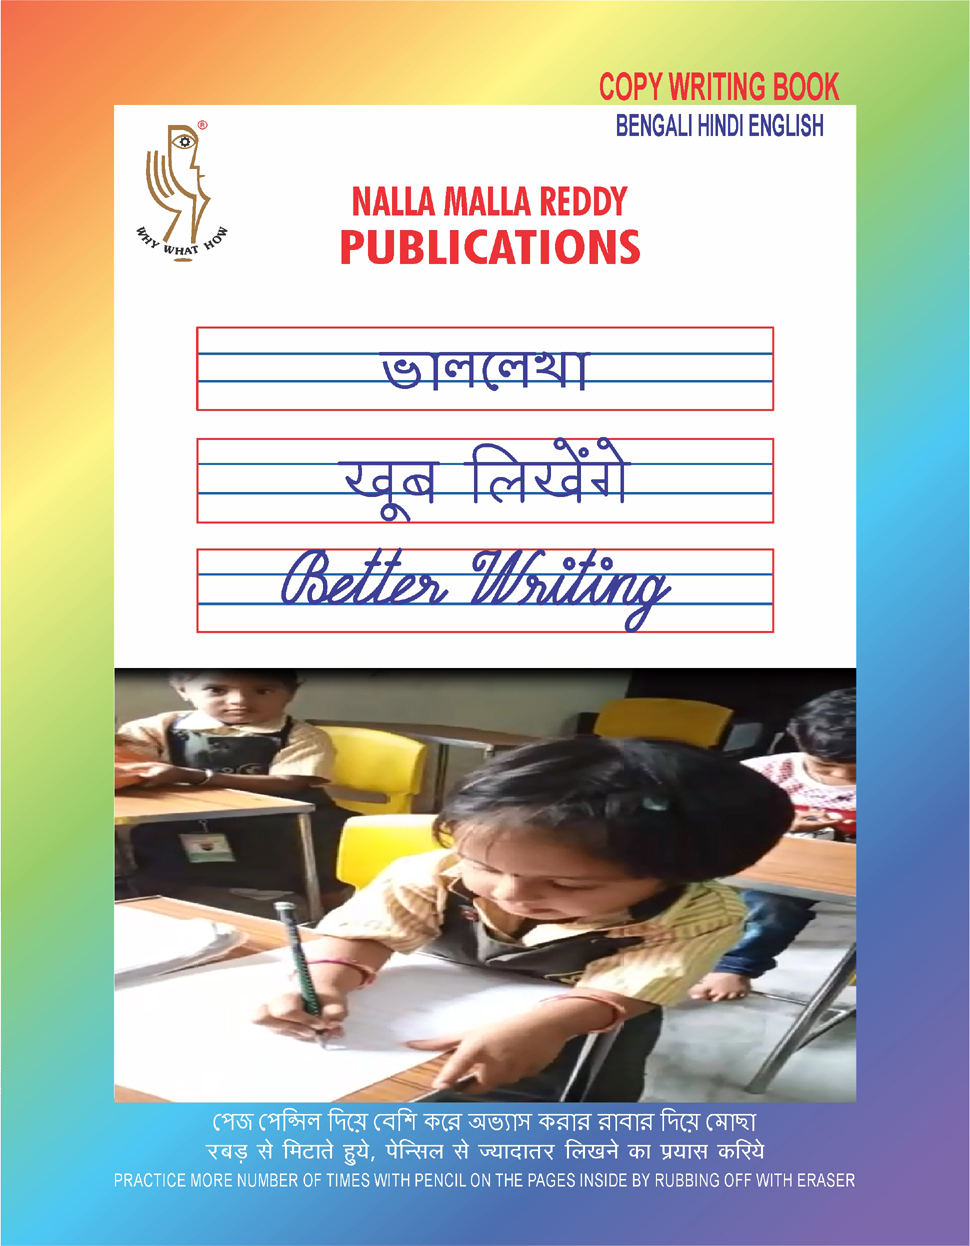 Bengali 3 in 1 copy writing book website